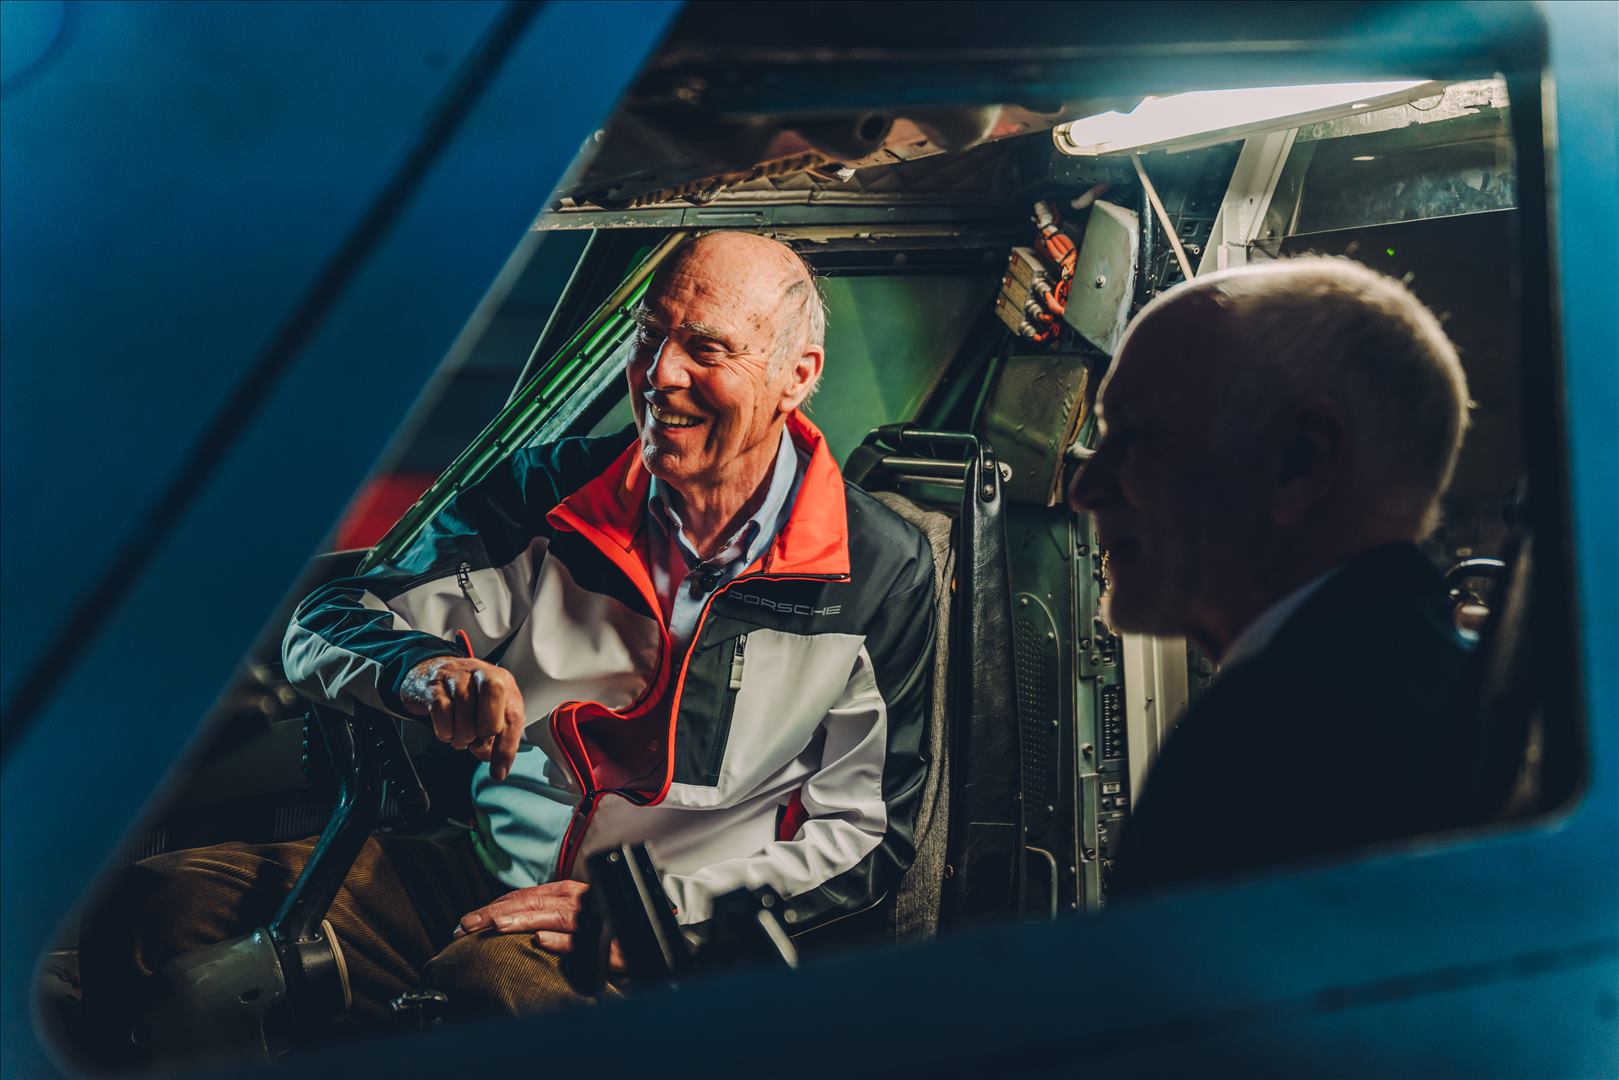 Richard Attwood in Concorde Cockpit